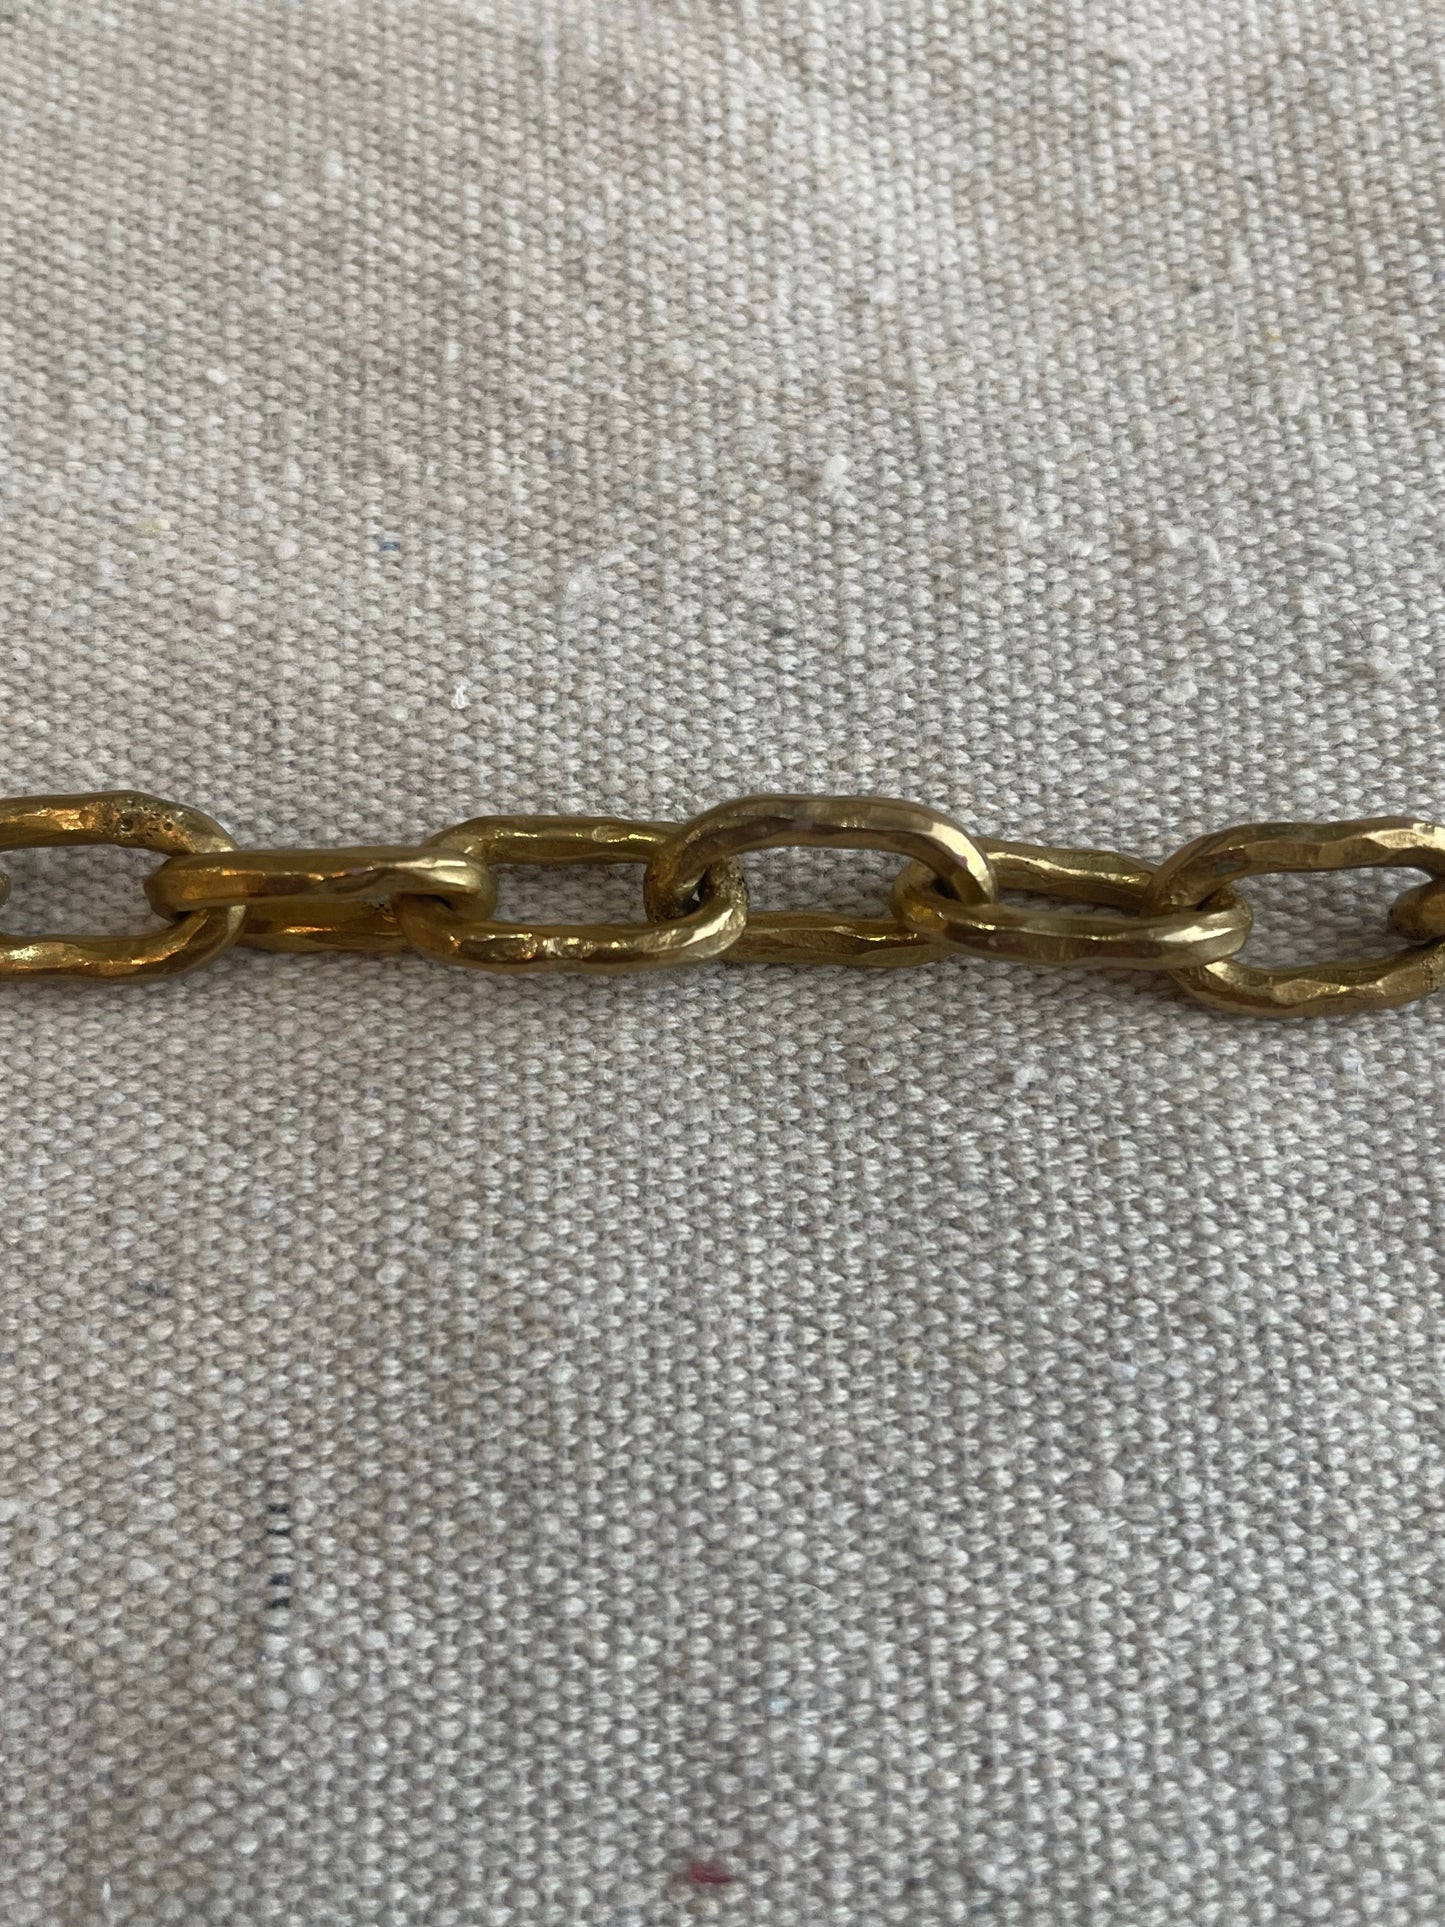 organic brass link necklace